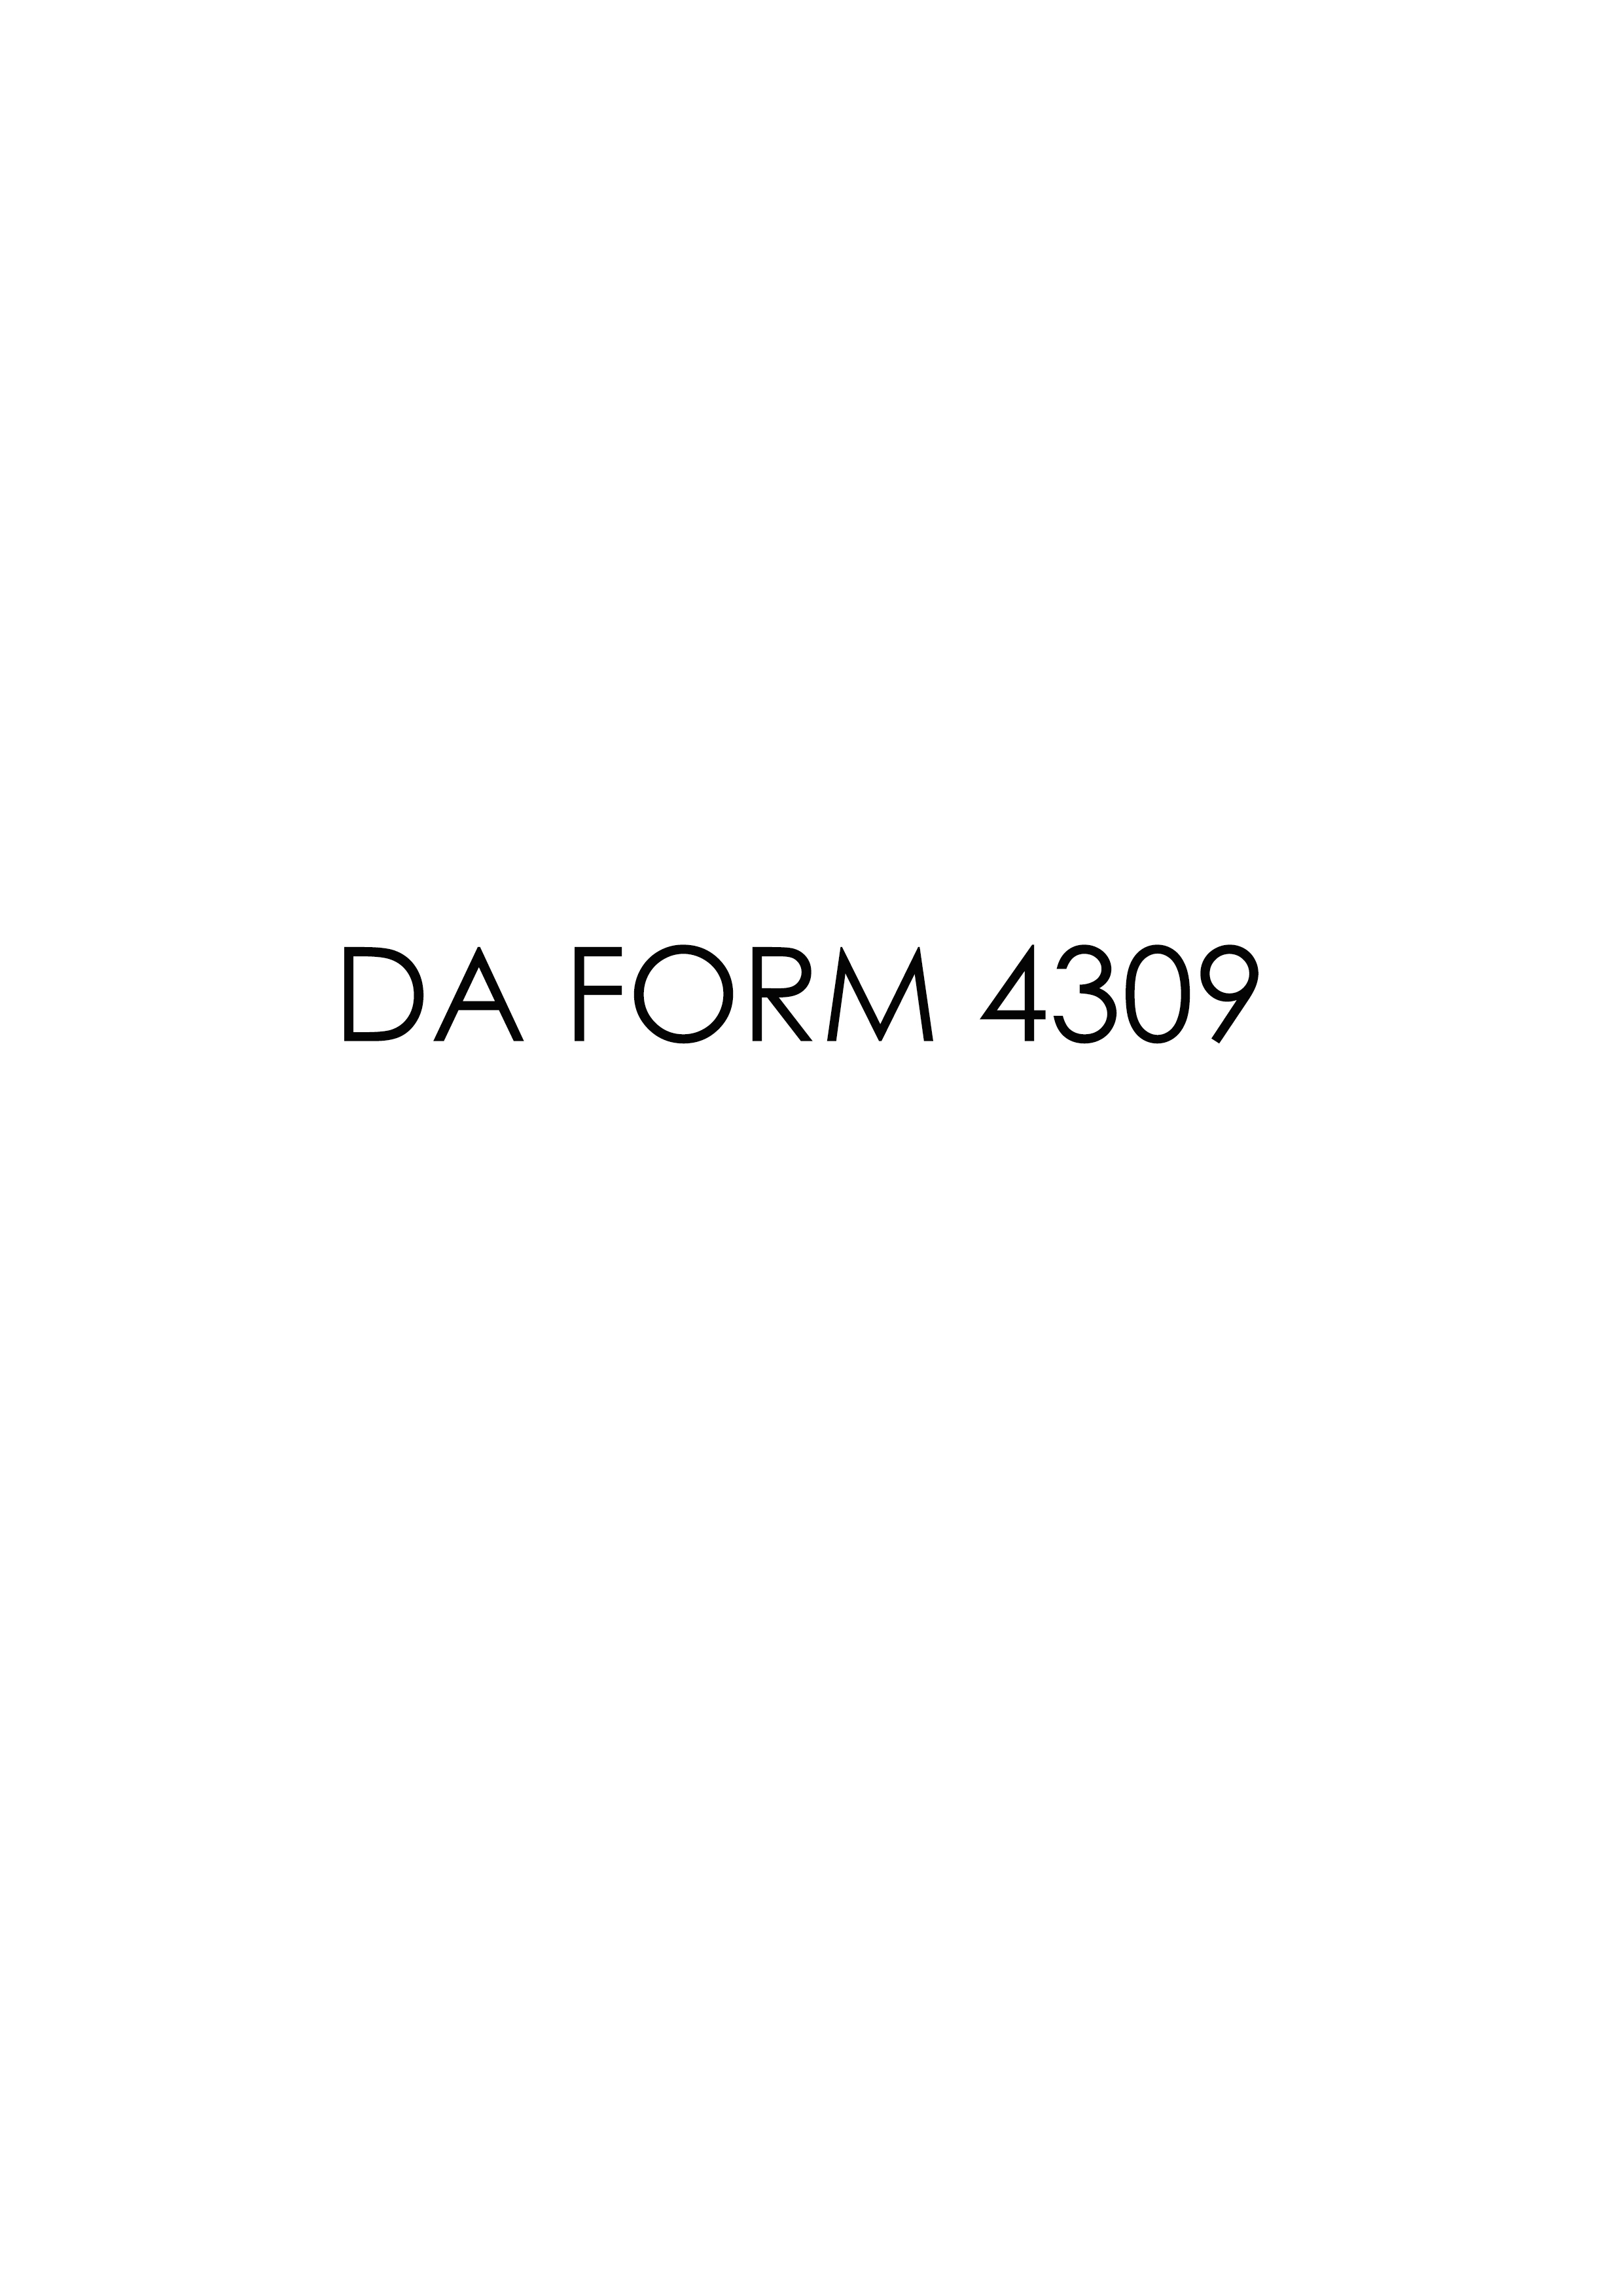 da Form 4309 fillable